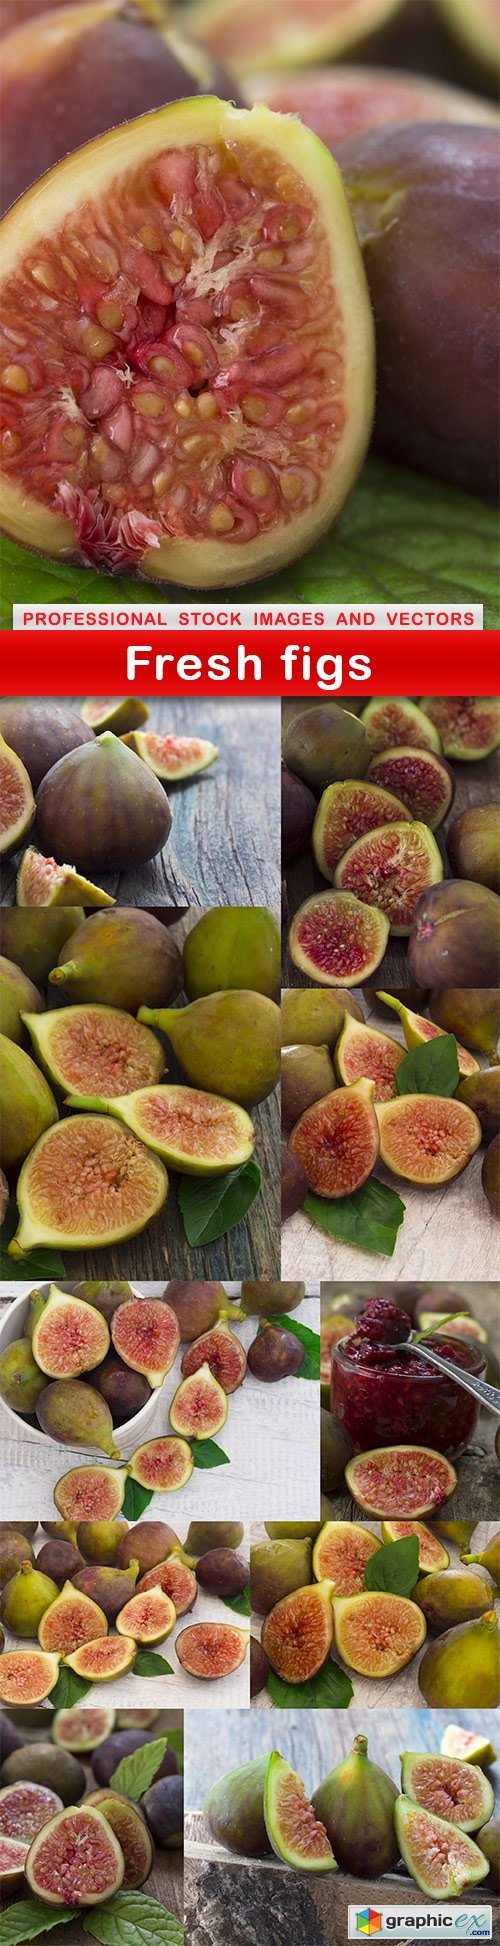 Fresh figs - 11 UHQ JPEG